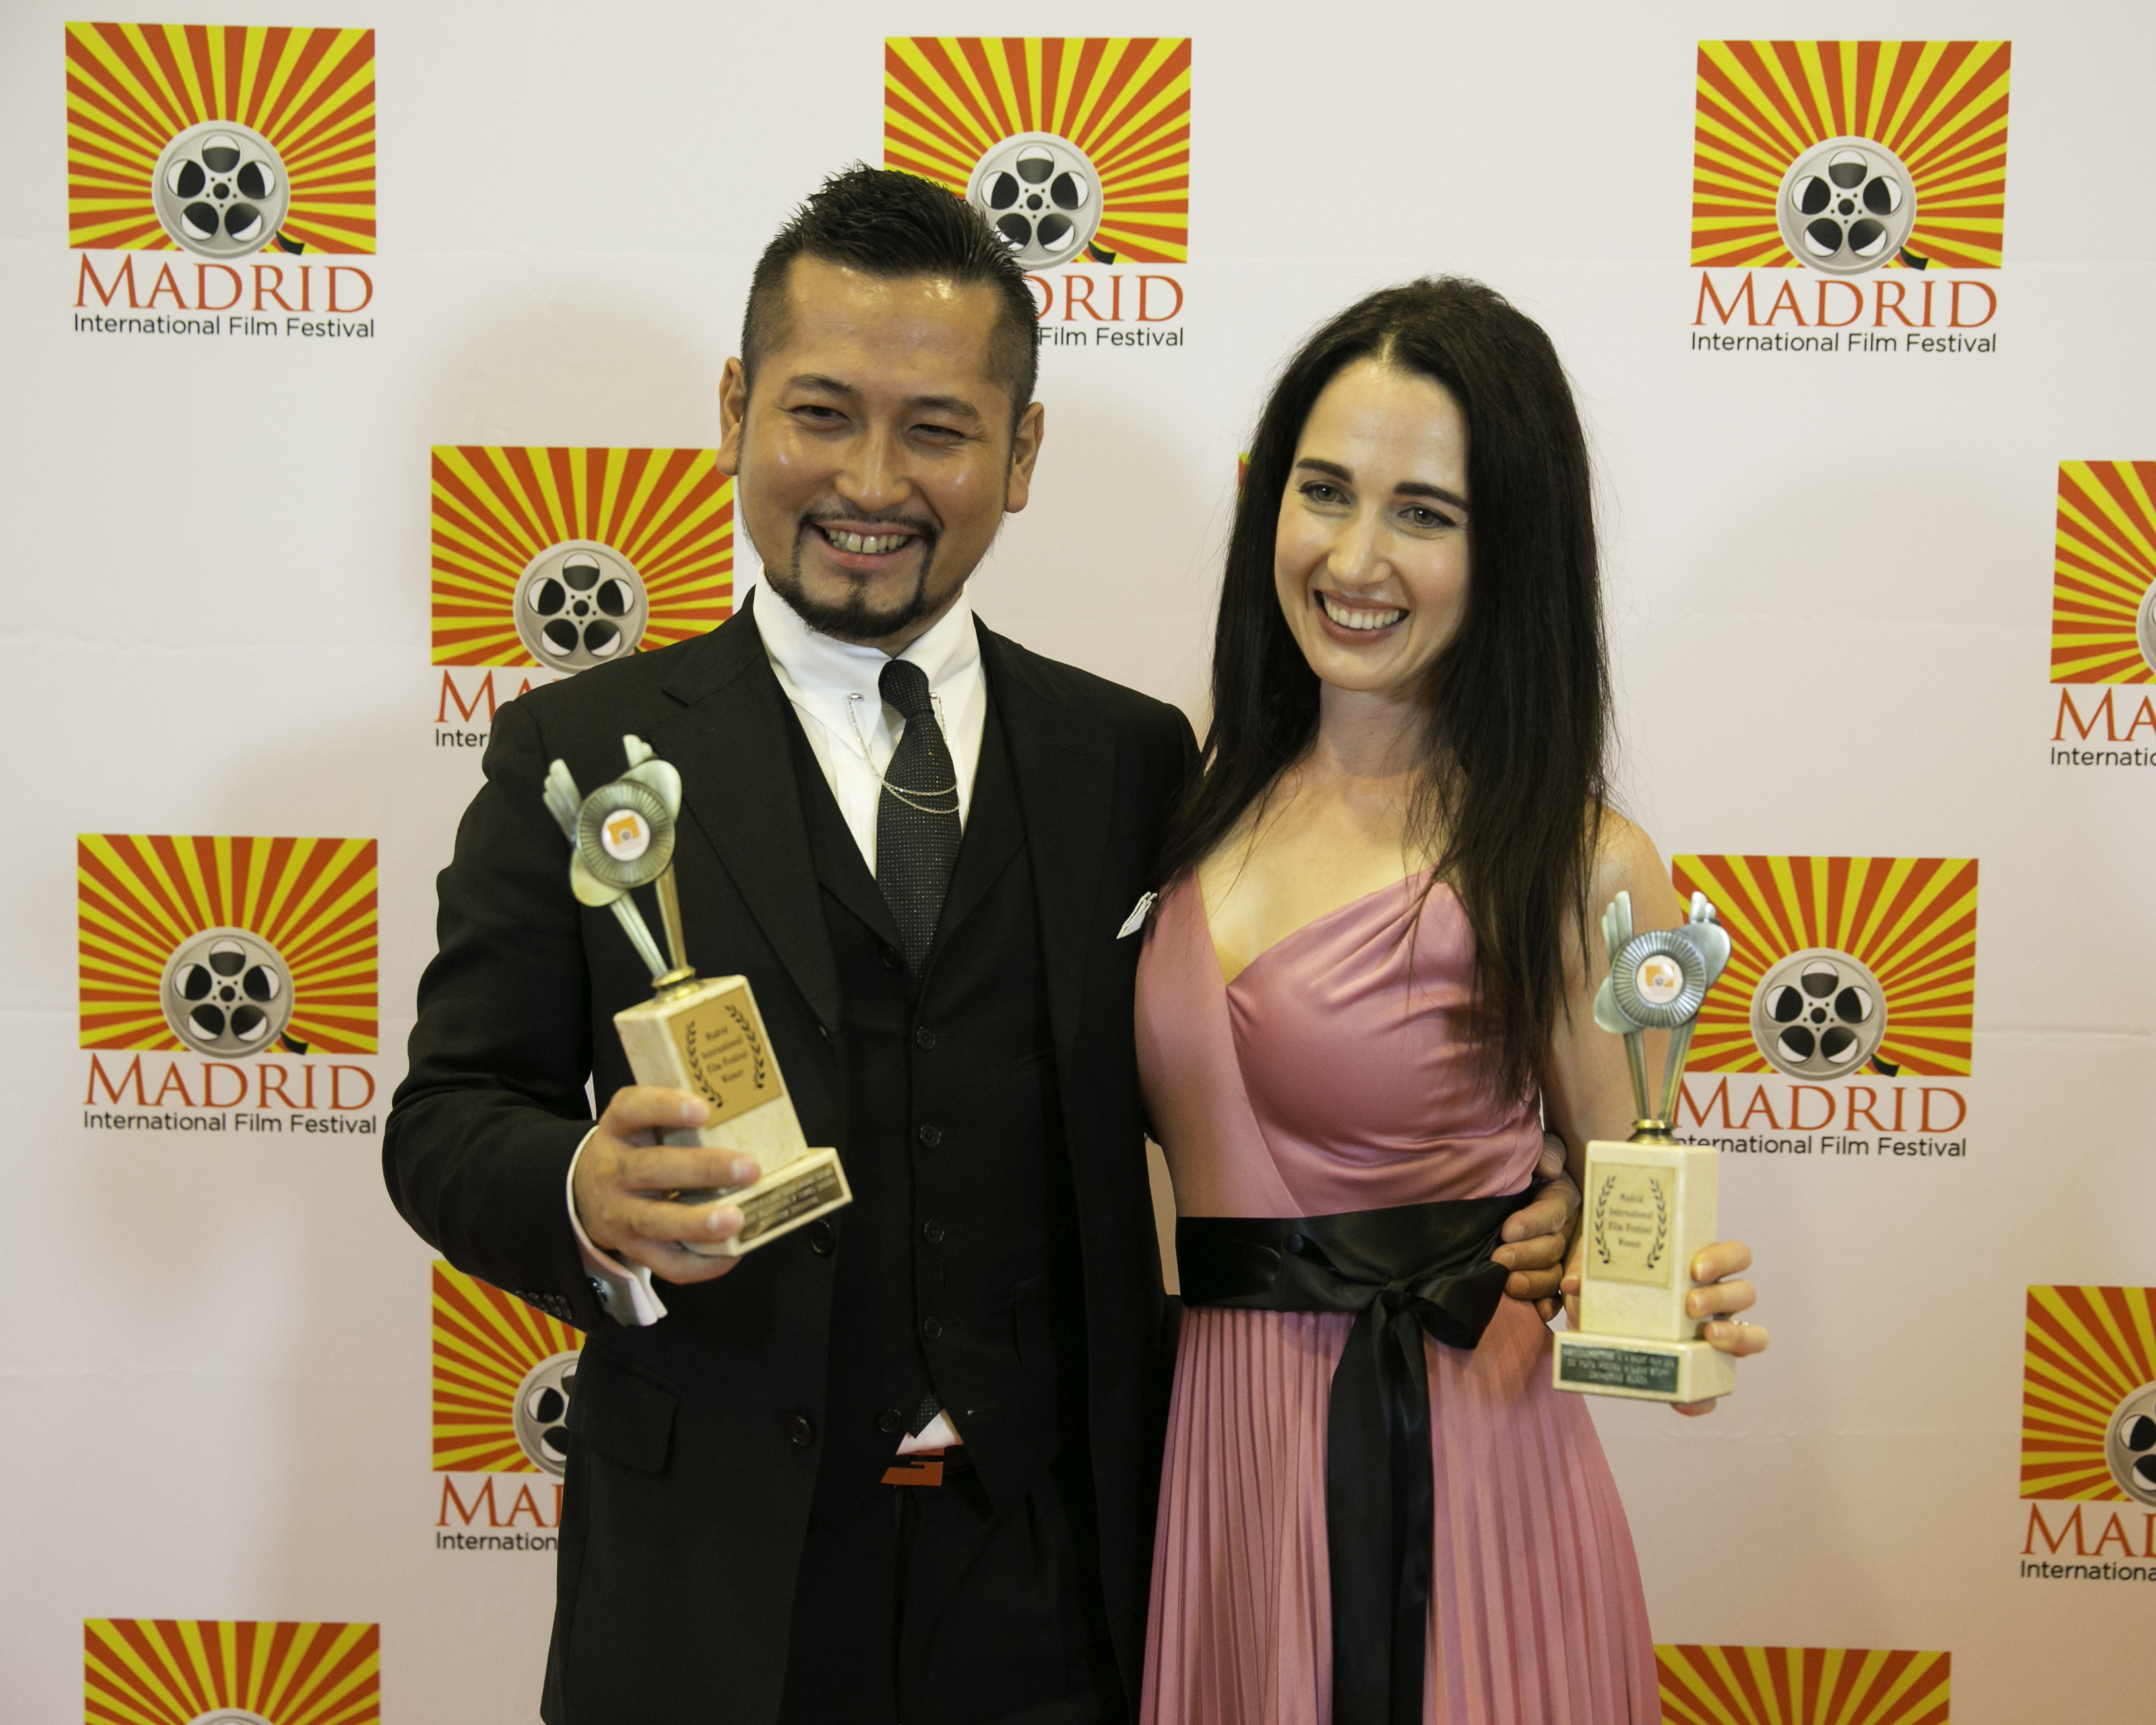 2014 Madrid International Film Festival winners Kenshow Onodara and Catherine Black